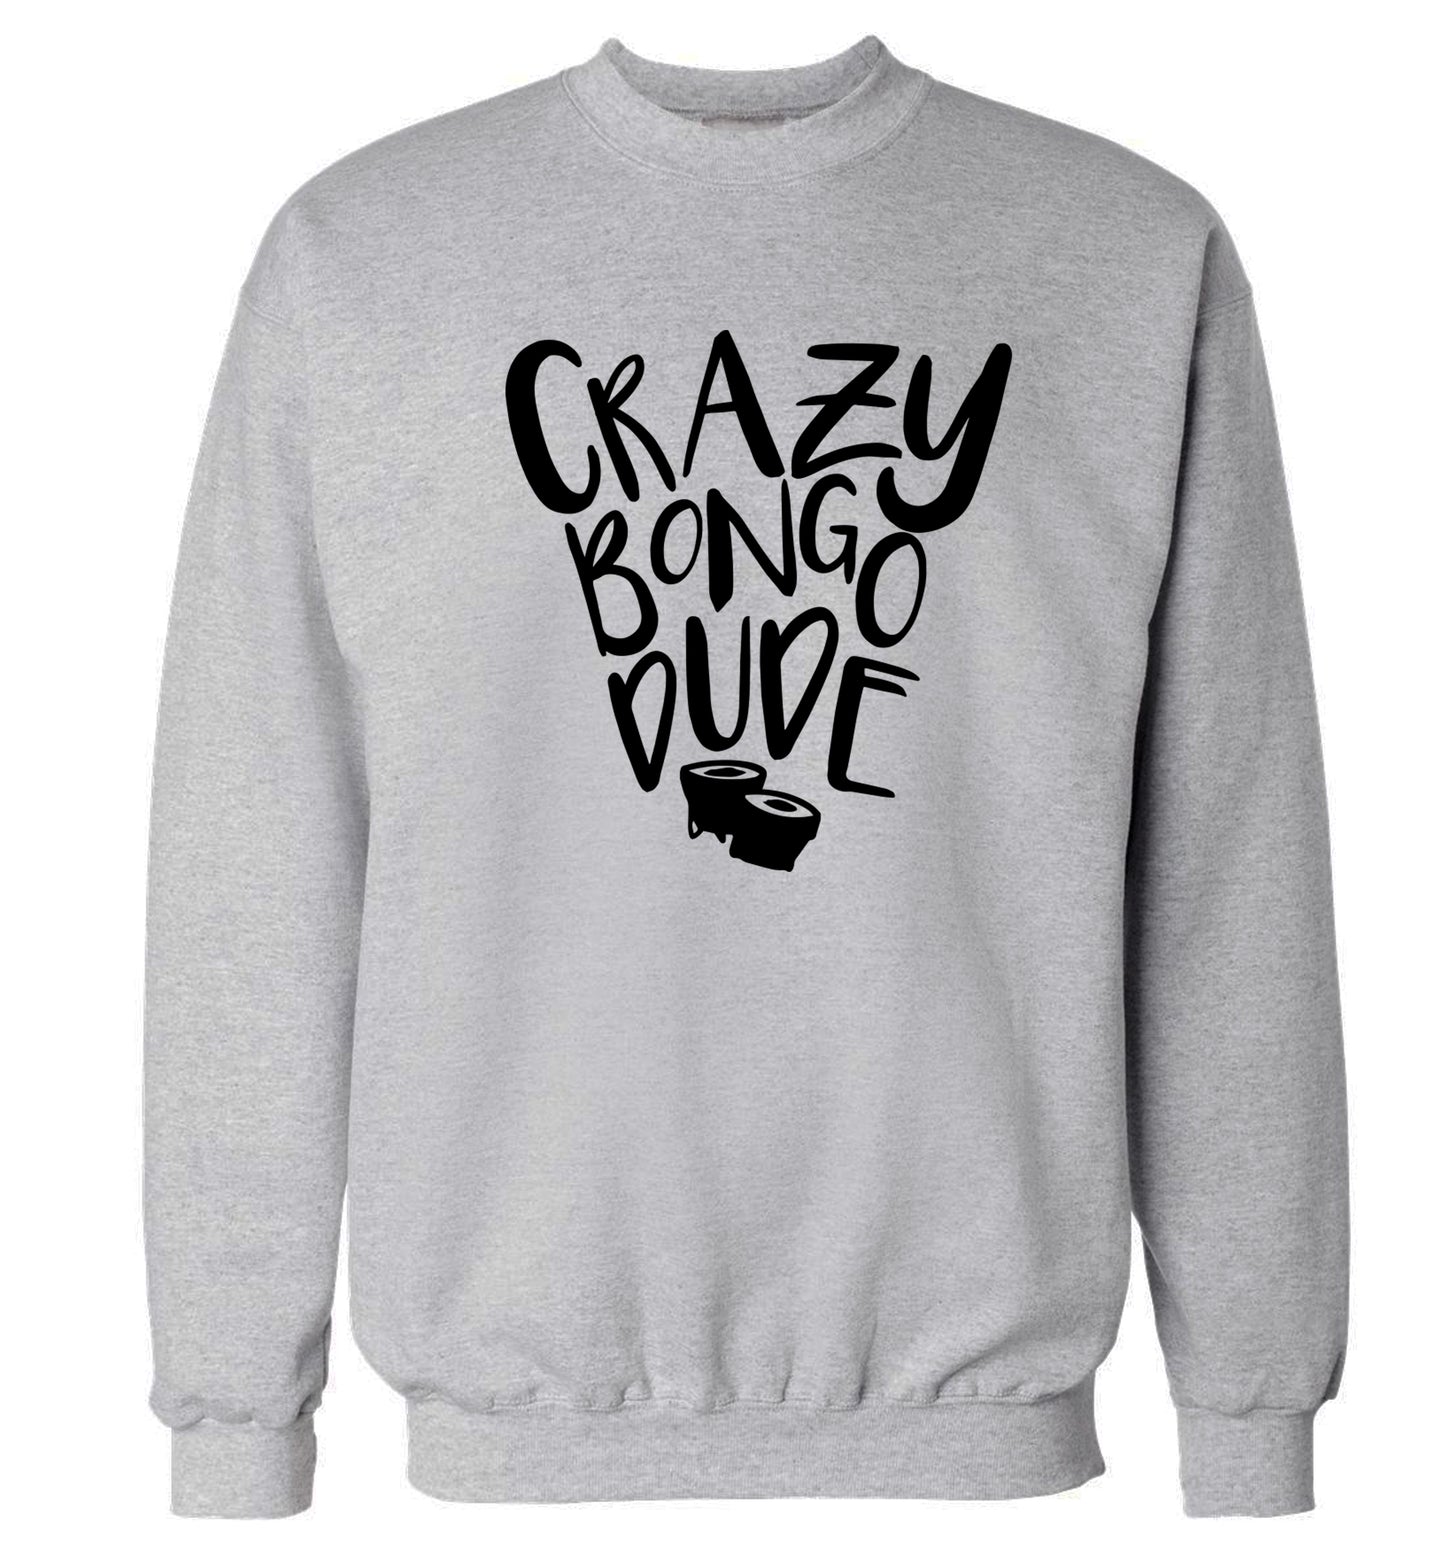 Crazy bongo dude Adult's unisex grey Sweater 2XL